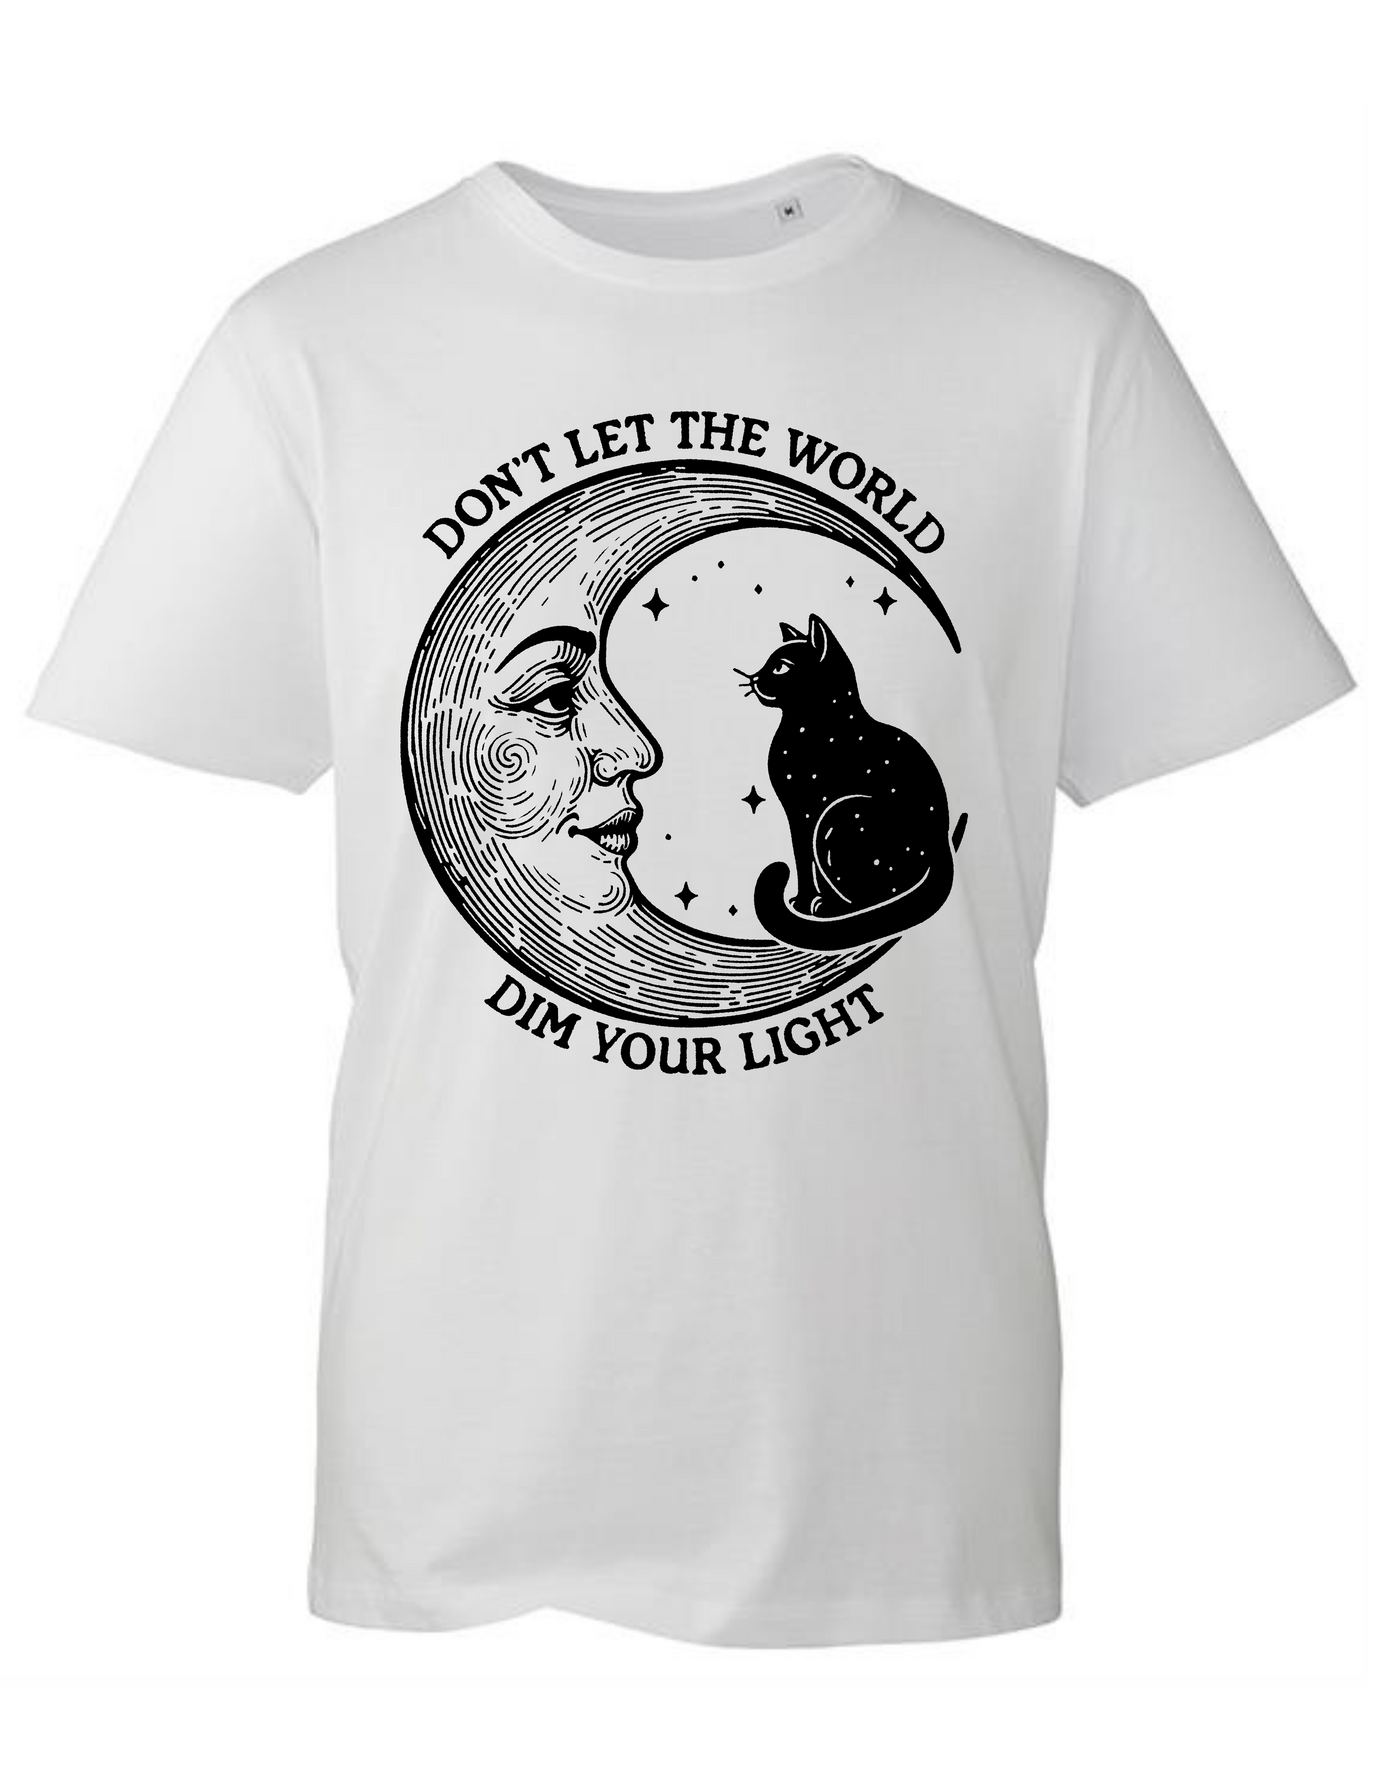 “Dim Your Light" Unisex Organic T-Shirt